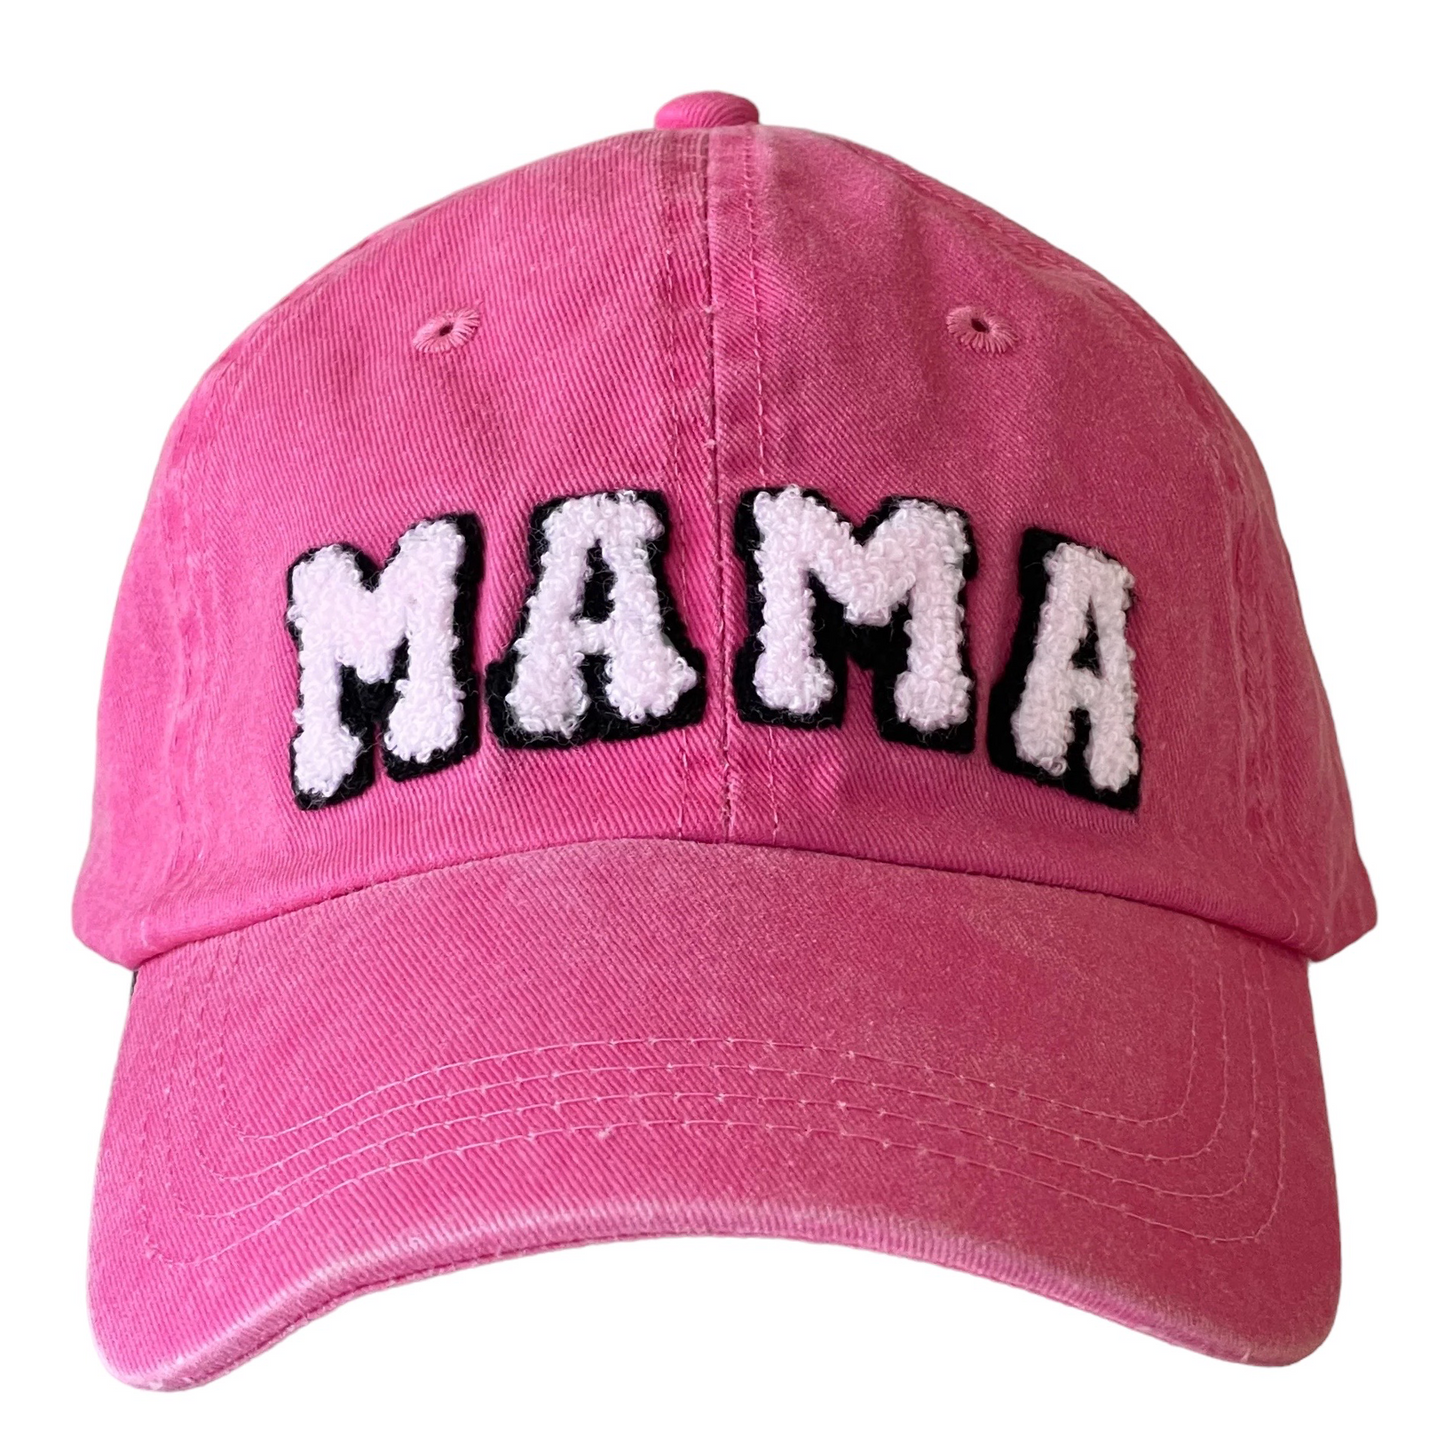 MAMA Adult Baseball Hat, Vintage Wash Watermelon Pink